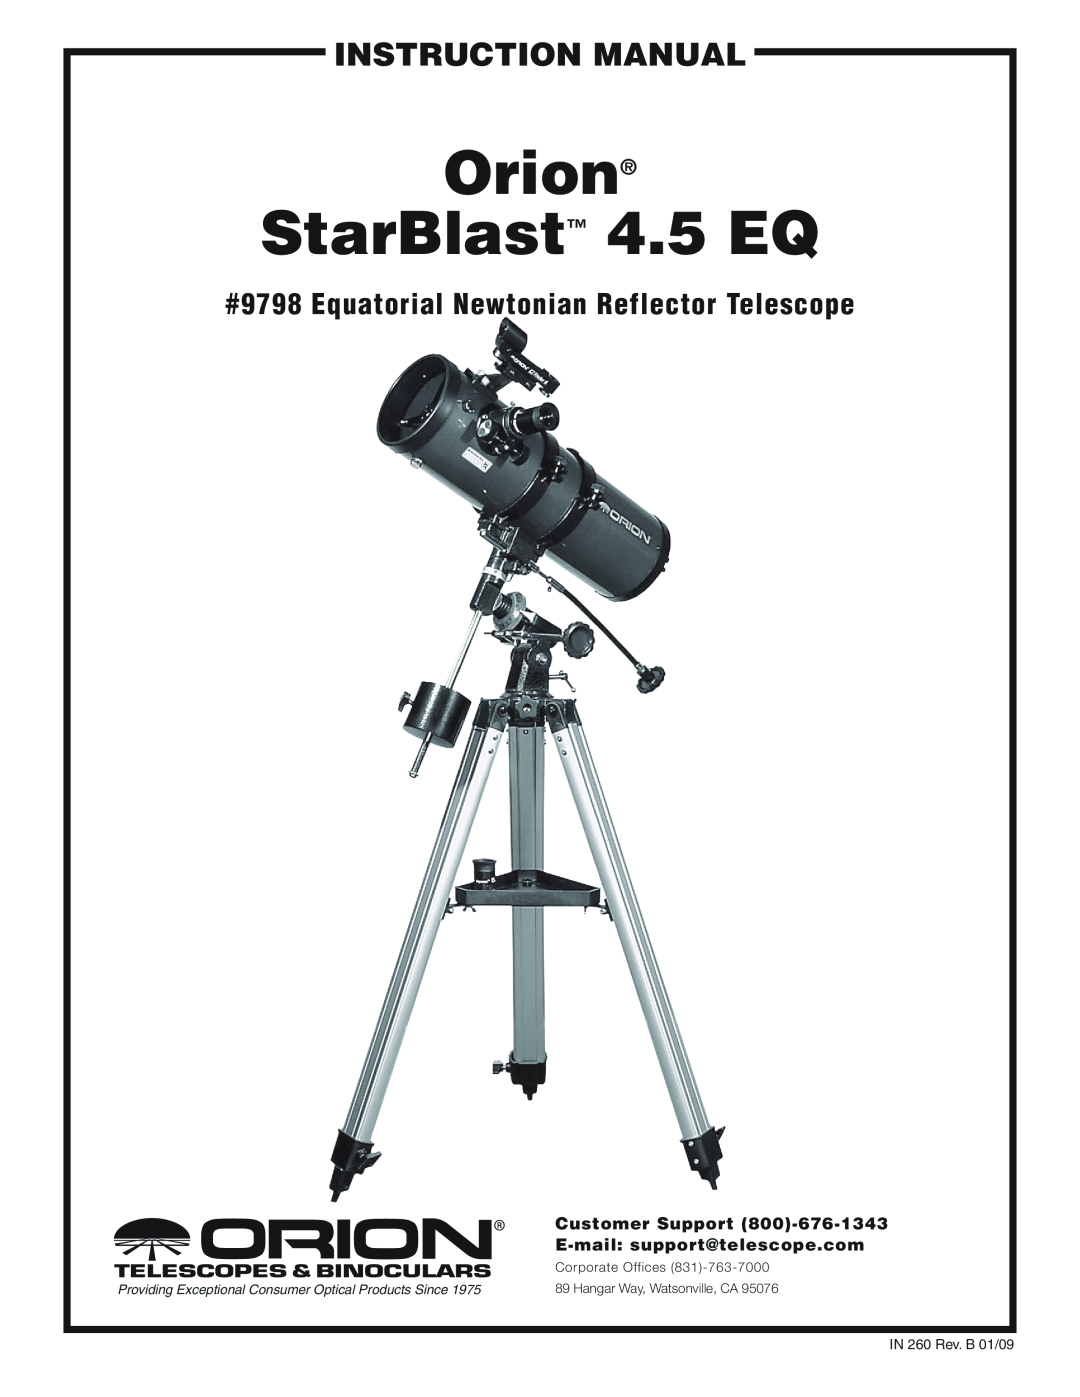 Orion instruction manual #9798 Equatorial Newtonian Reflector Telescope, Orion StarBlast 4.5 EQ 